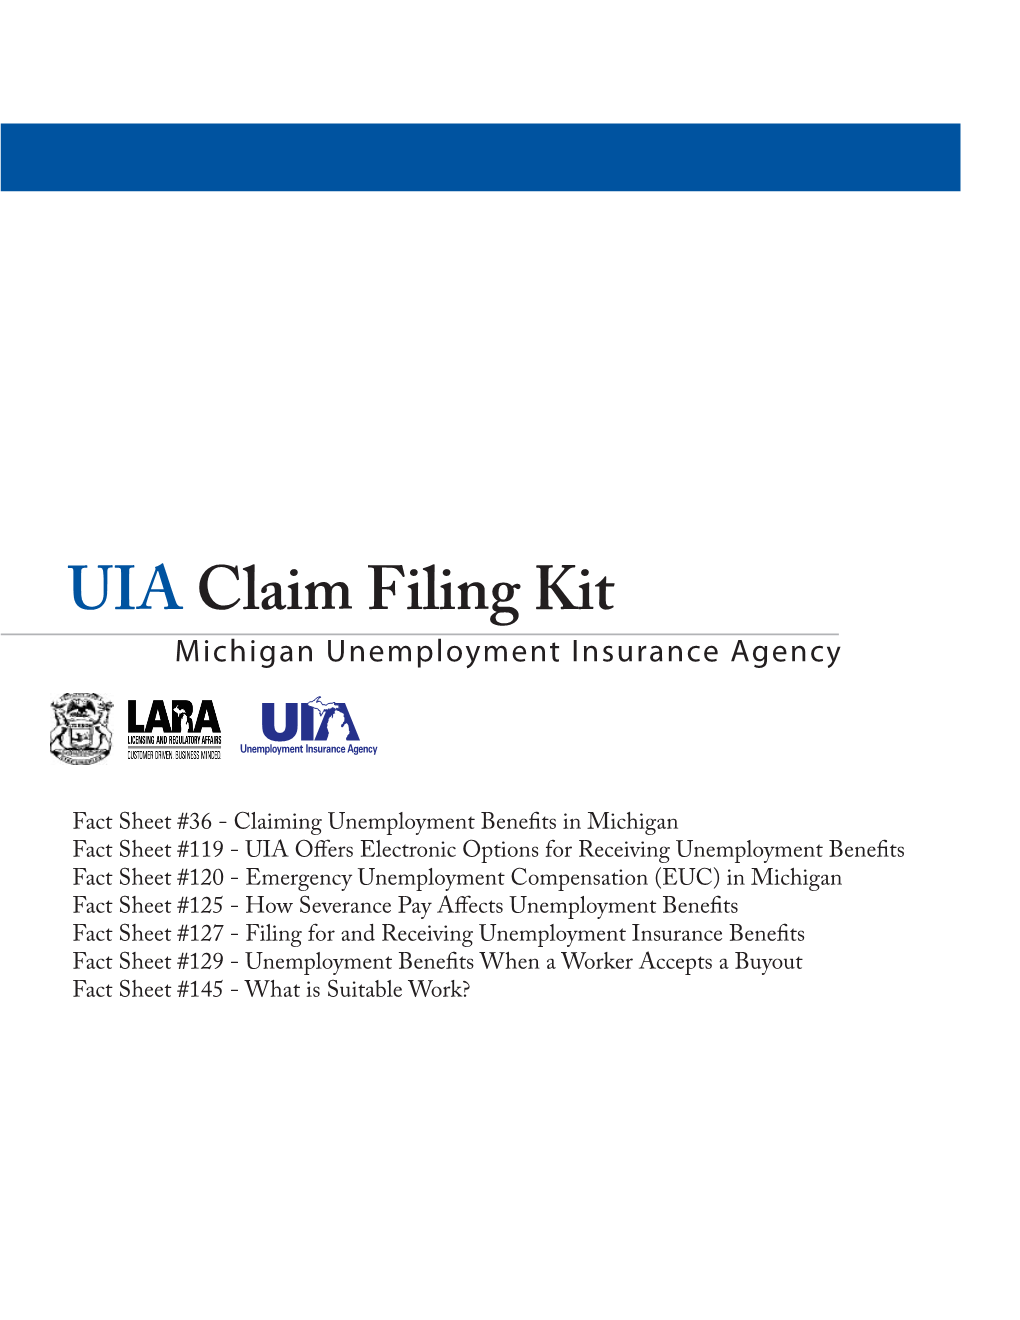 UIA Claim Filing Kit Michigan Unemployment Insurance Agency